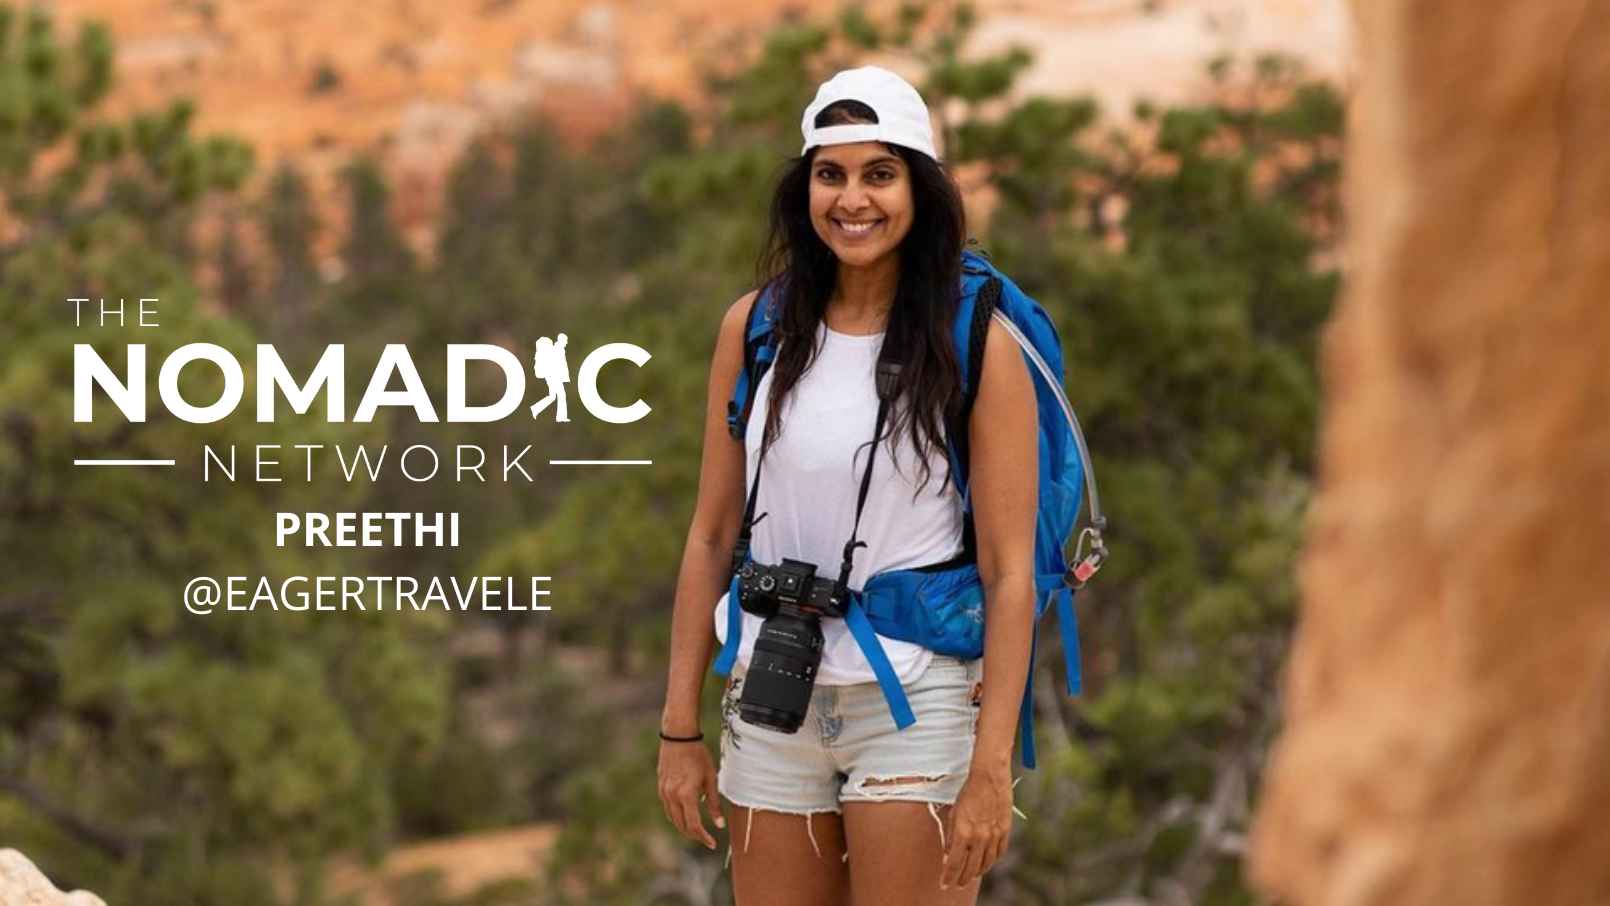 Preethi, a solo female travel photographer